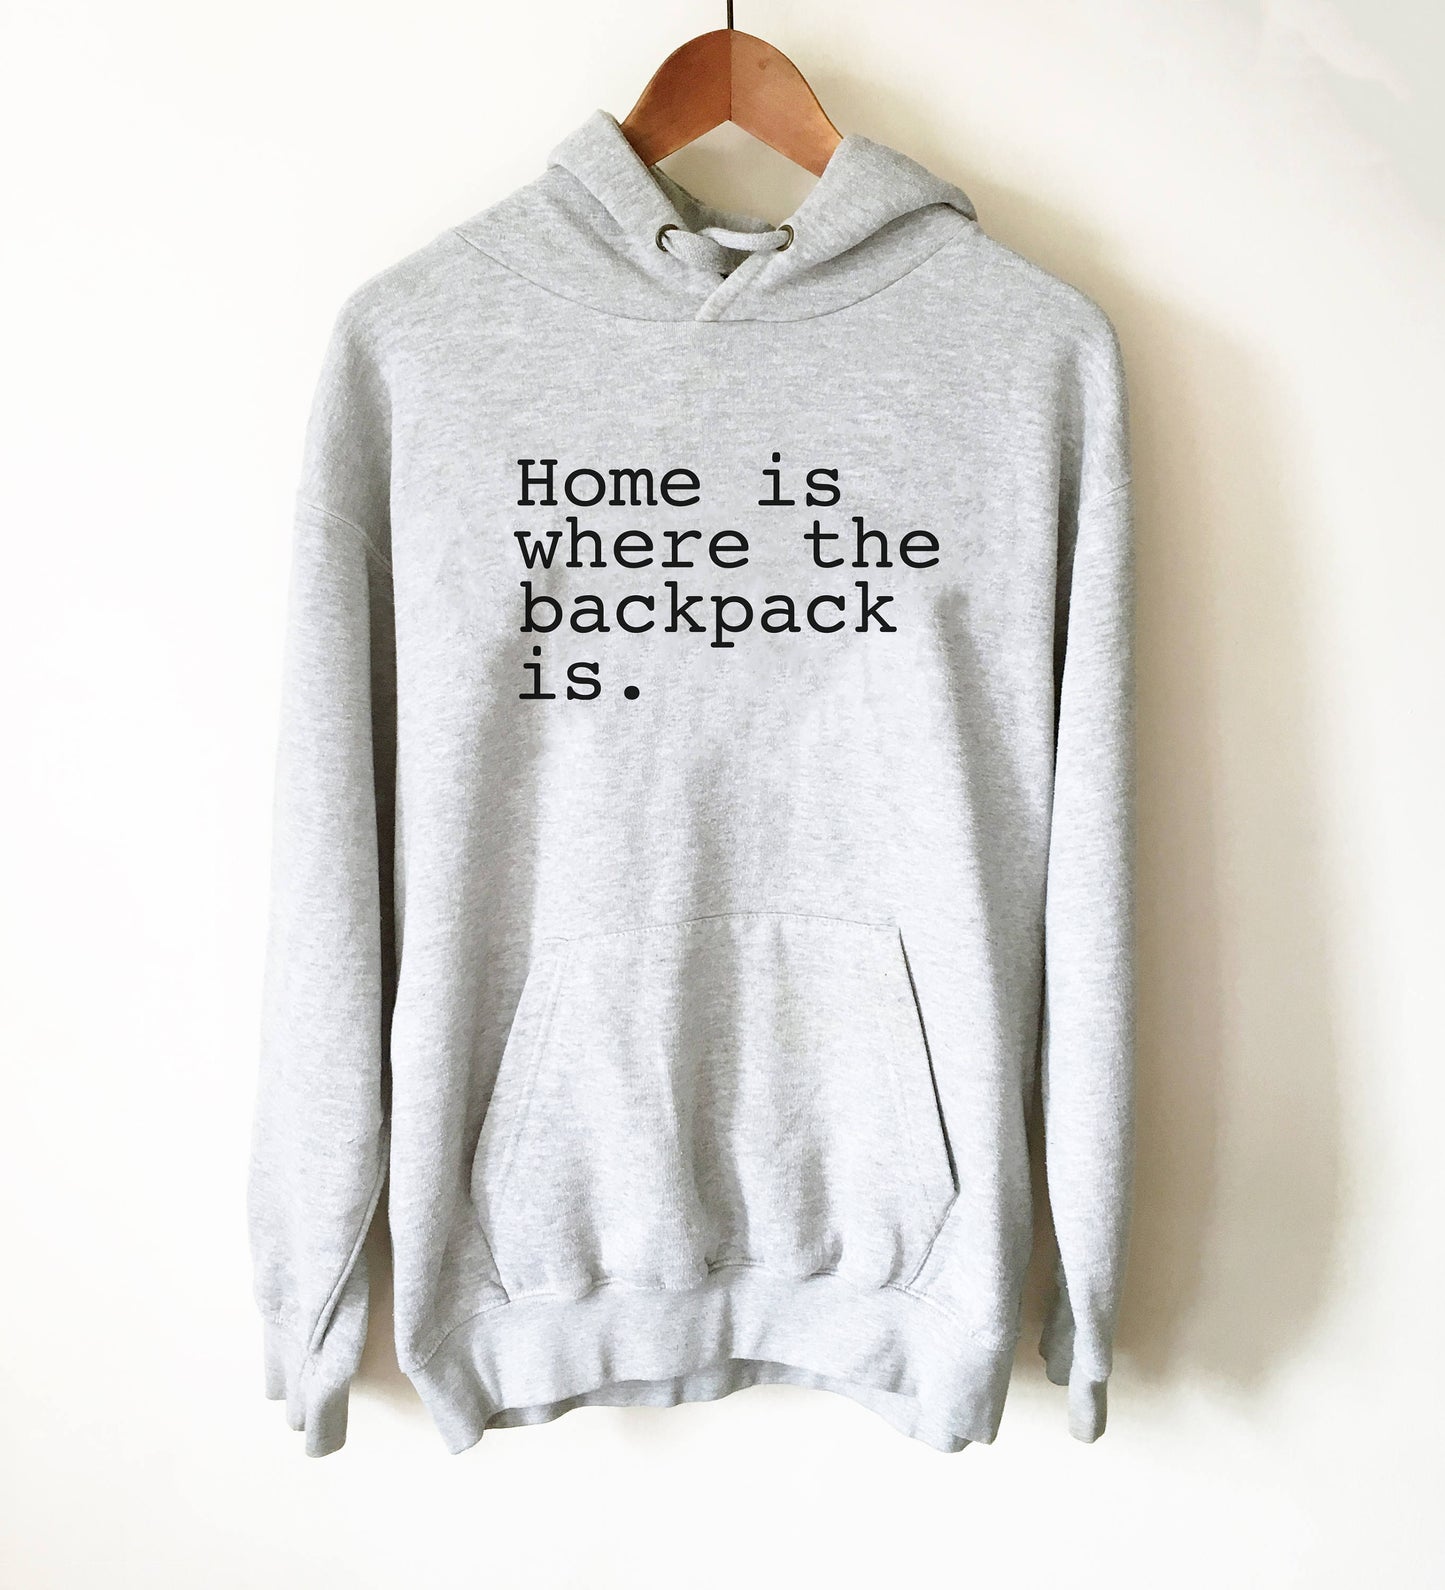 Home Is Where The Backpack Is Hoodie - Backpacking shirt | Adventure shirt | Travel shirt | World traveler shirt | Wanderlust shirt